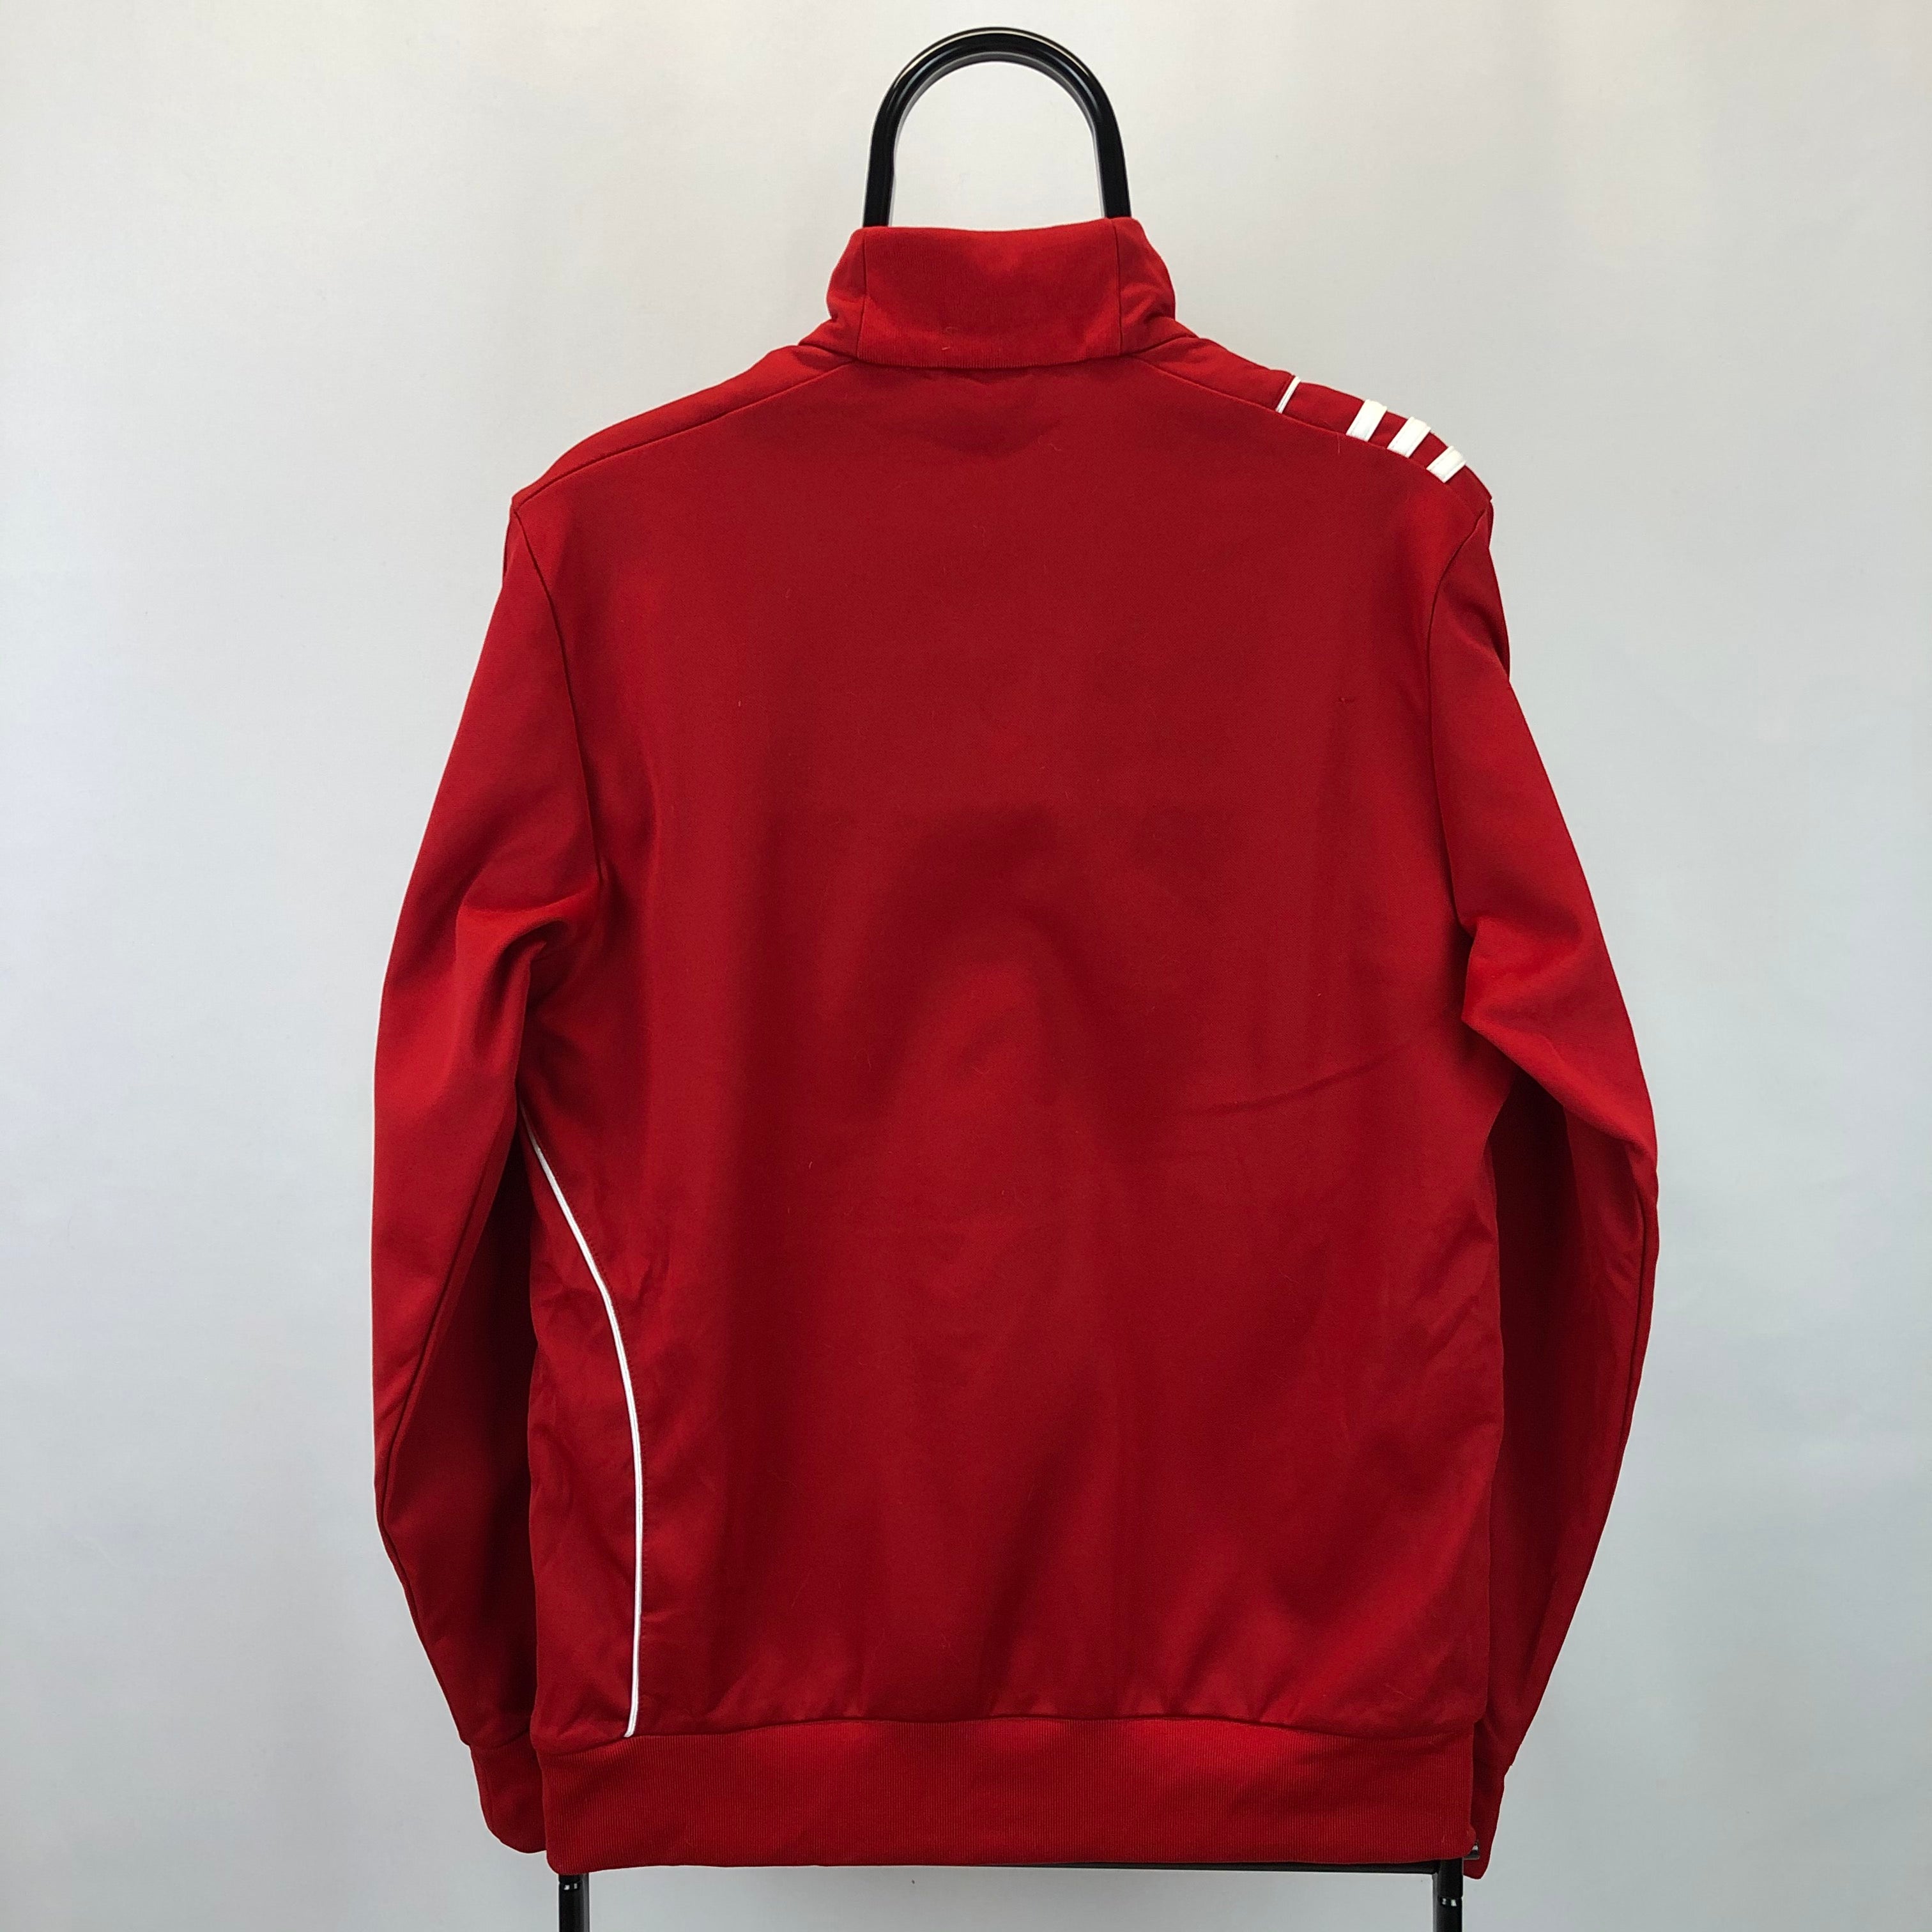 Adidas 1/4 Zip Track Jacket in Red/White - Men's Medium/Women's Large ...